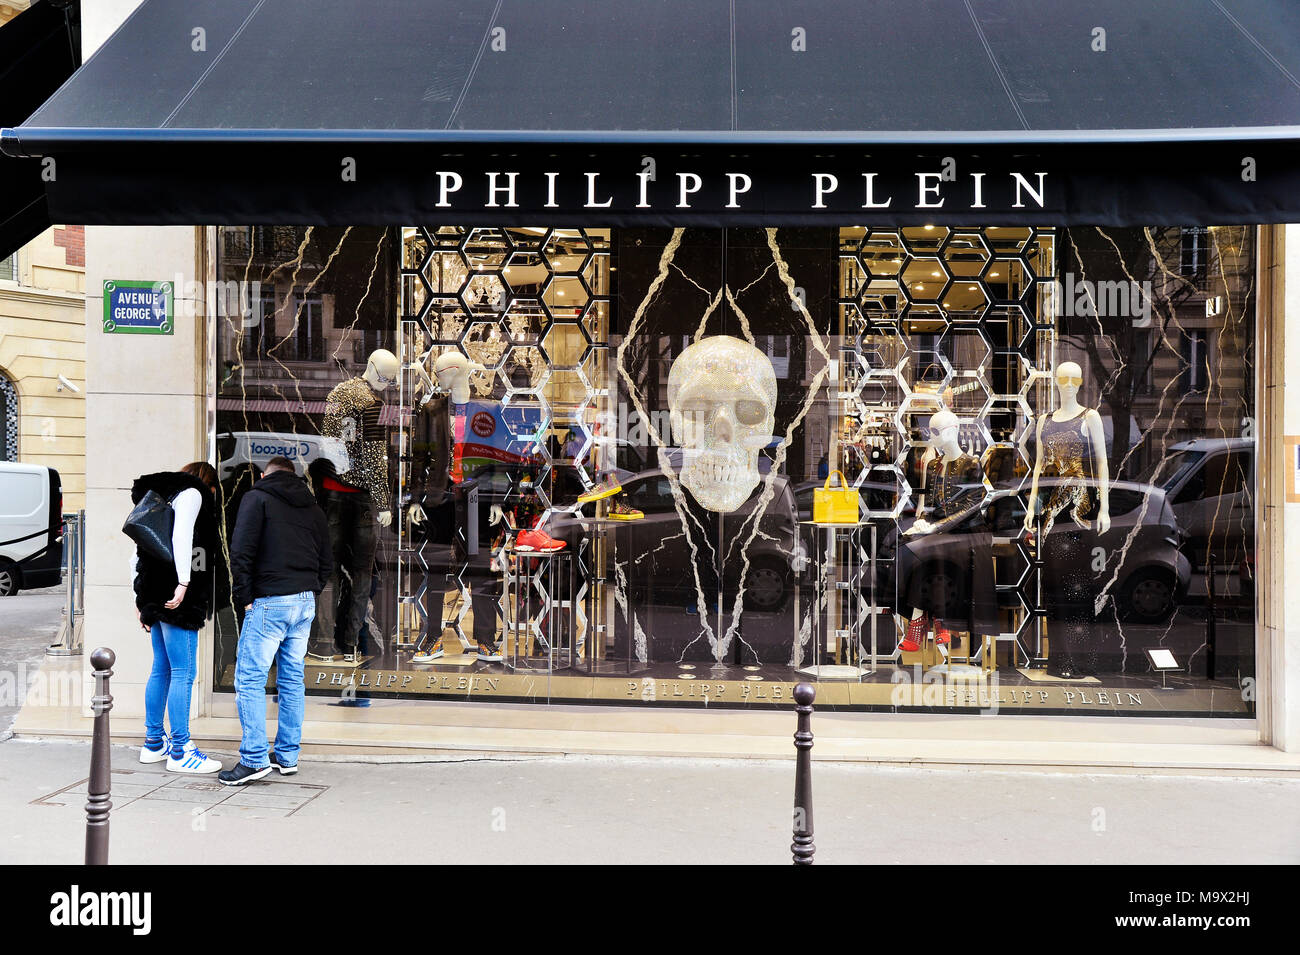 Philipp Plein shop - Avenue George V 